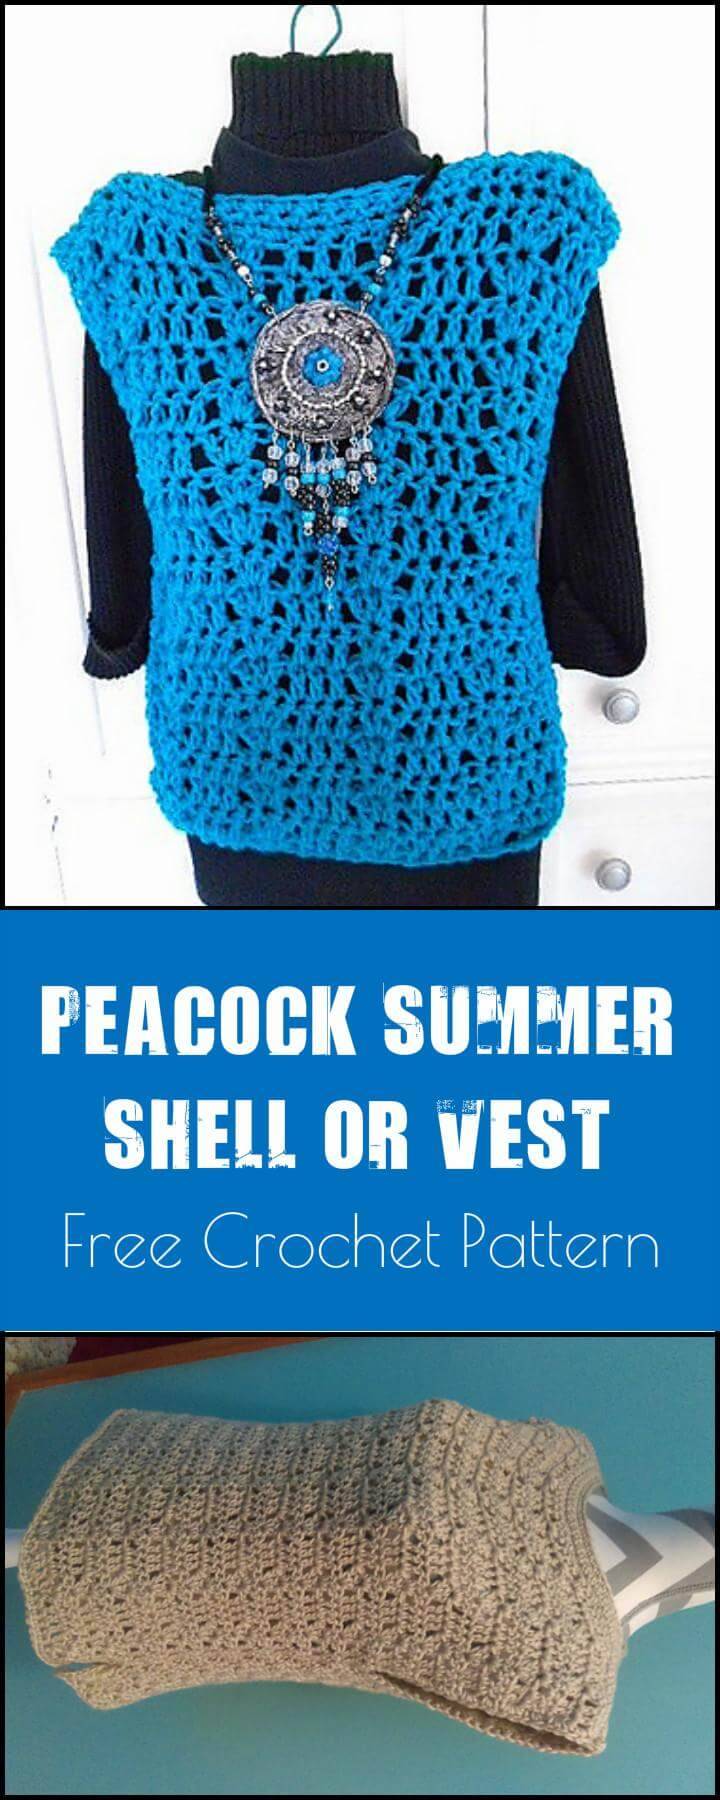 Peacock Summer Shell or Vest Free Crochet Pattern